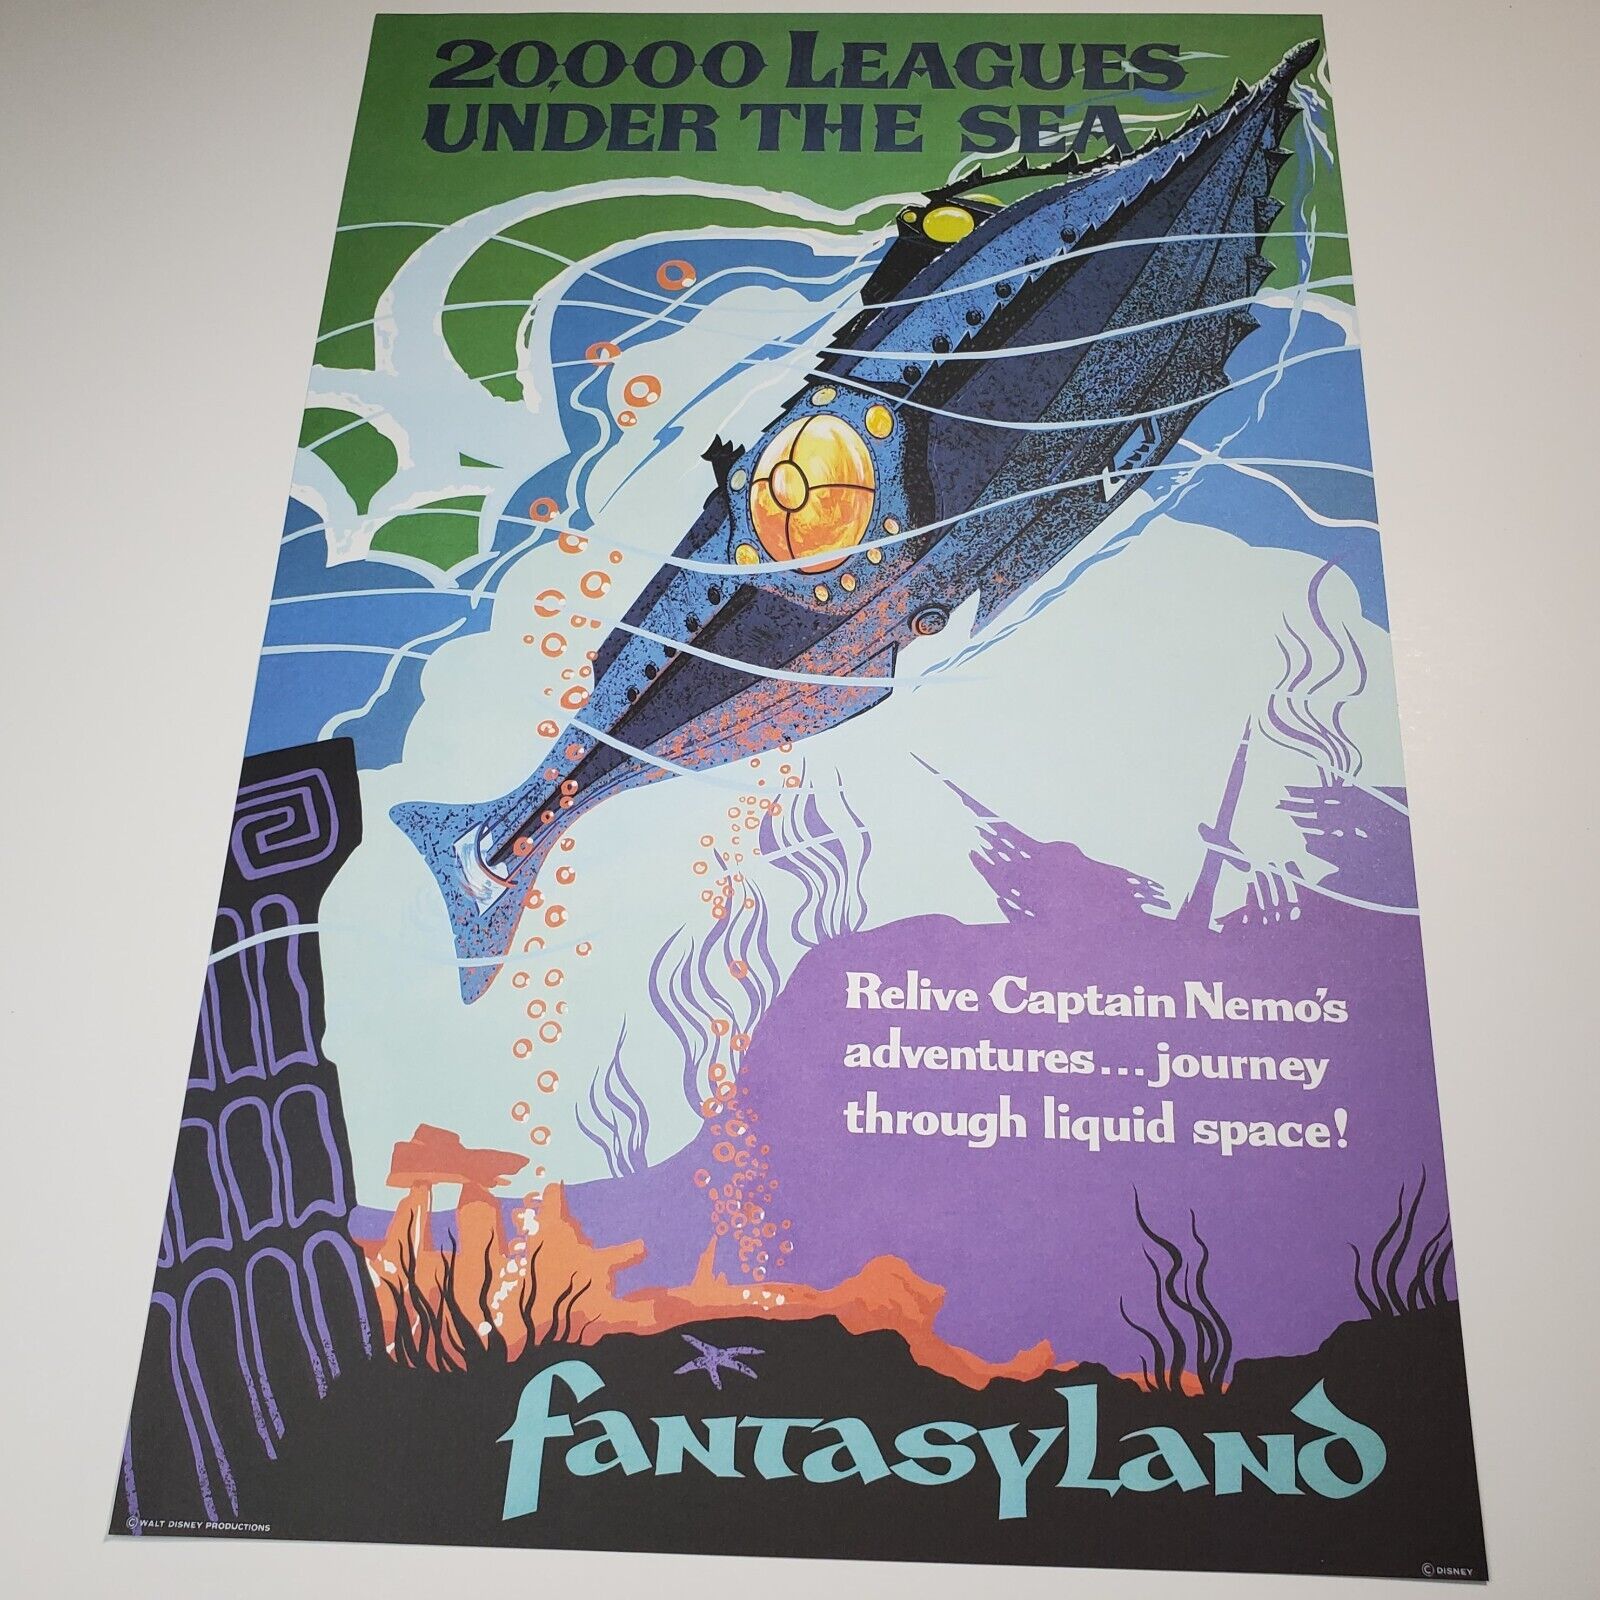 20,000 Leagues Under the Sea Authentic Disney Poster 12x18 WDW Fantasyland